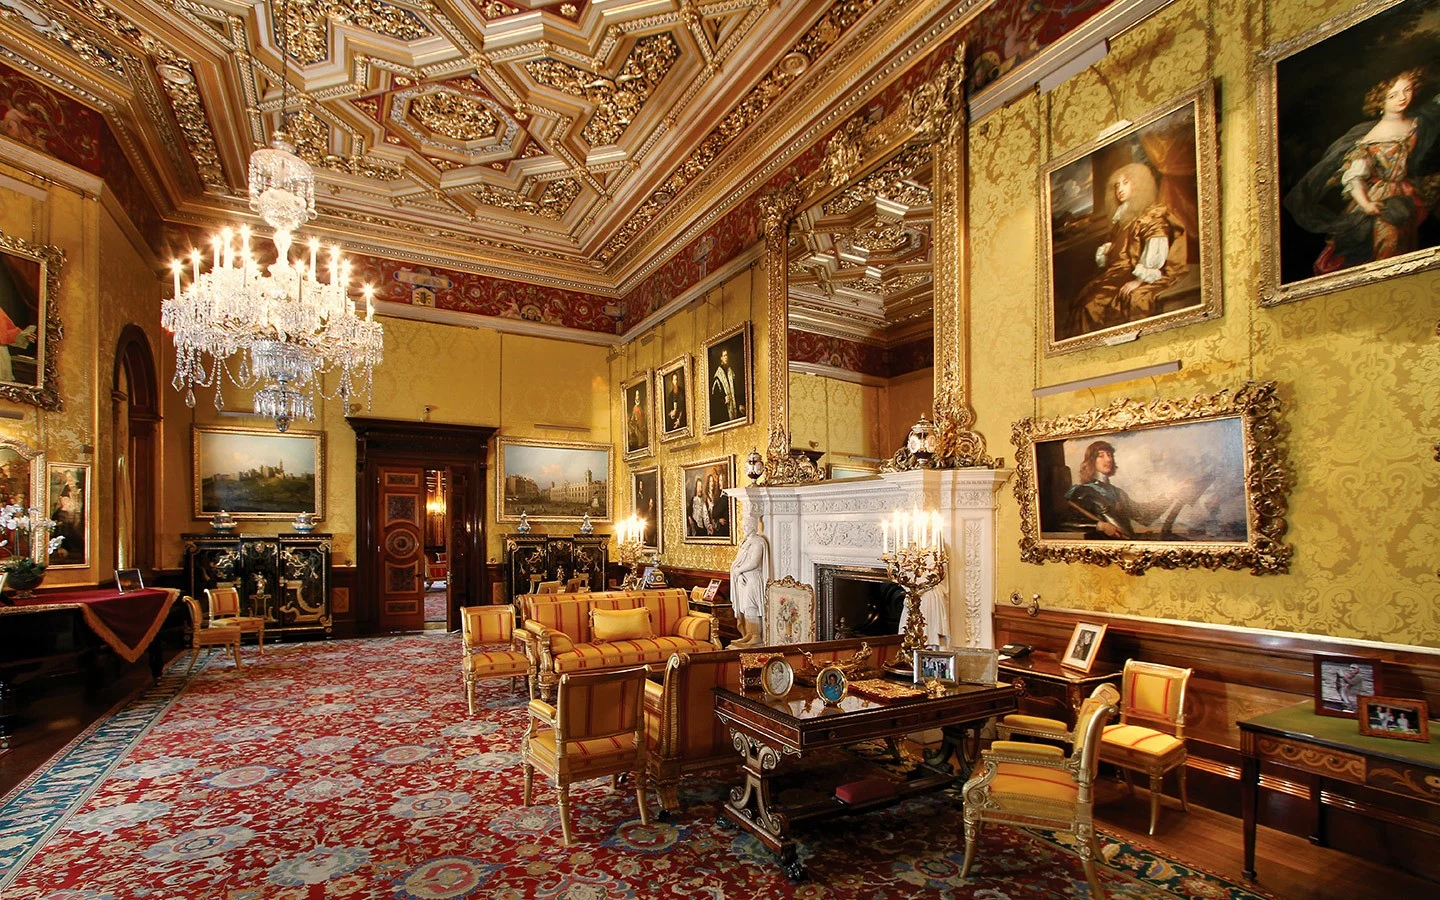 Alnwick's lavish interiors